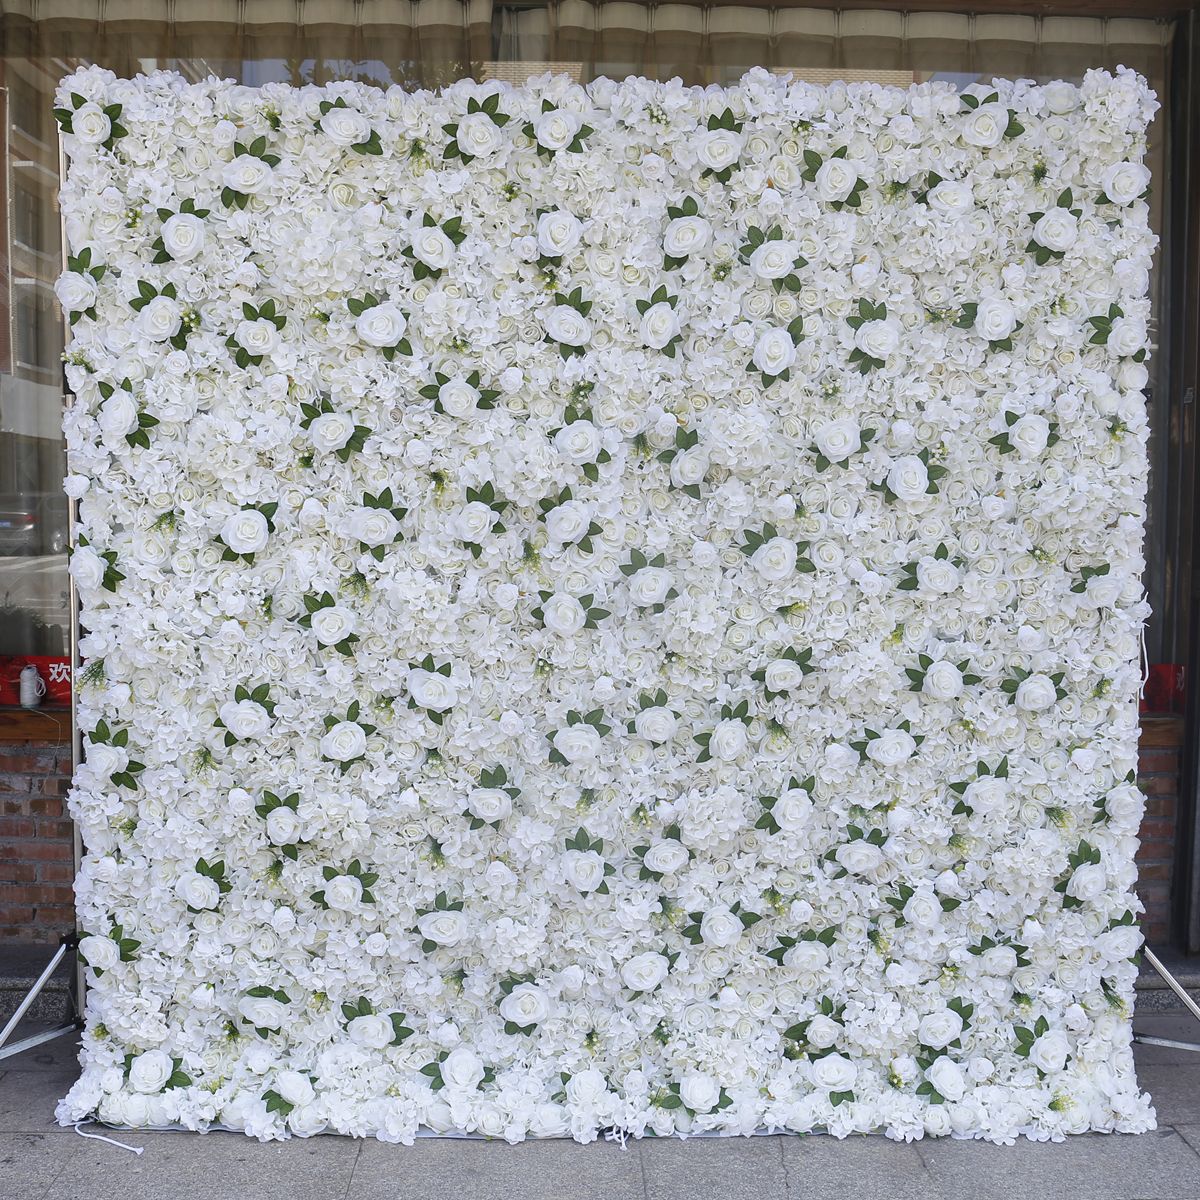 Simulation flower background wall wedding decoration